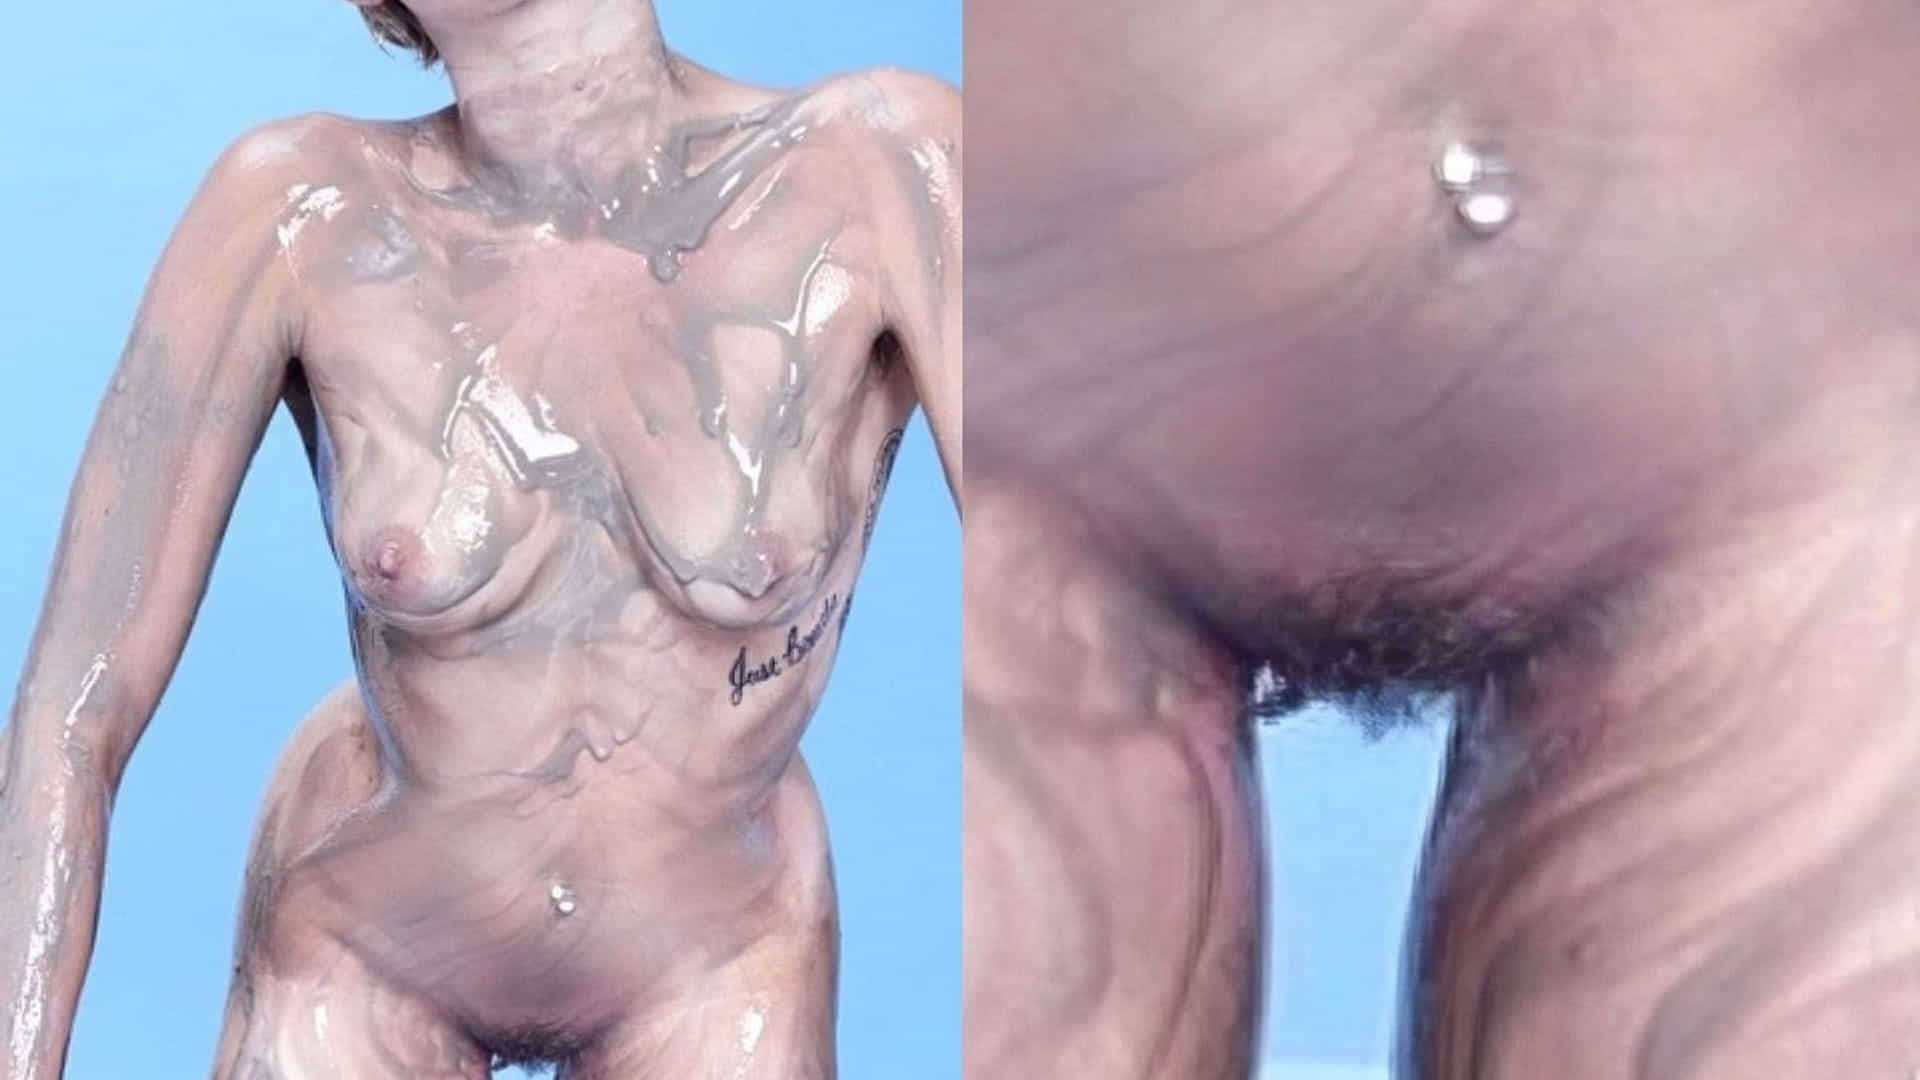 Nude Miley Cyrus Fake 2